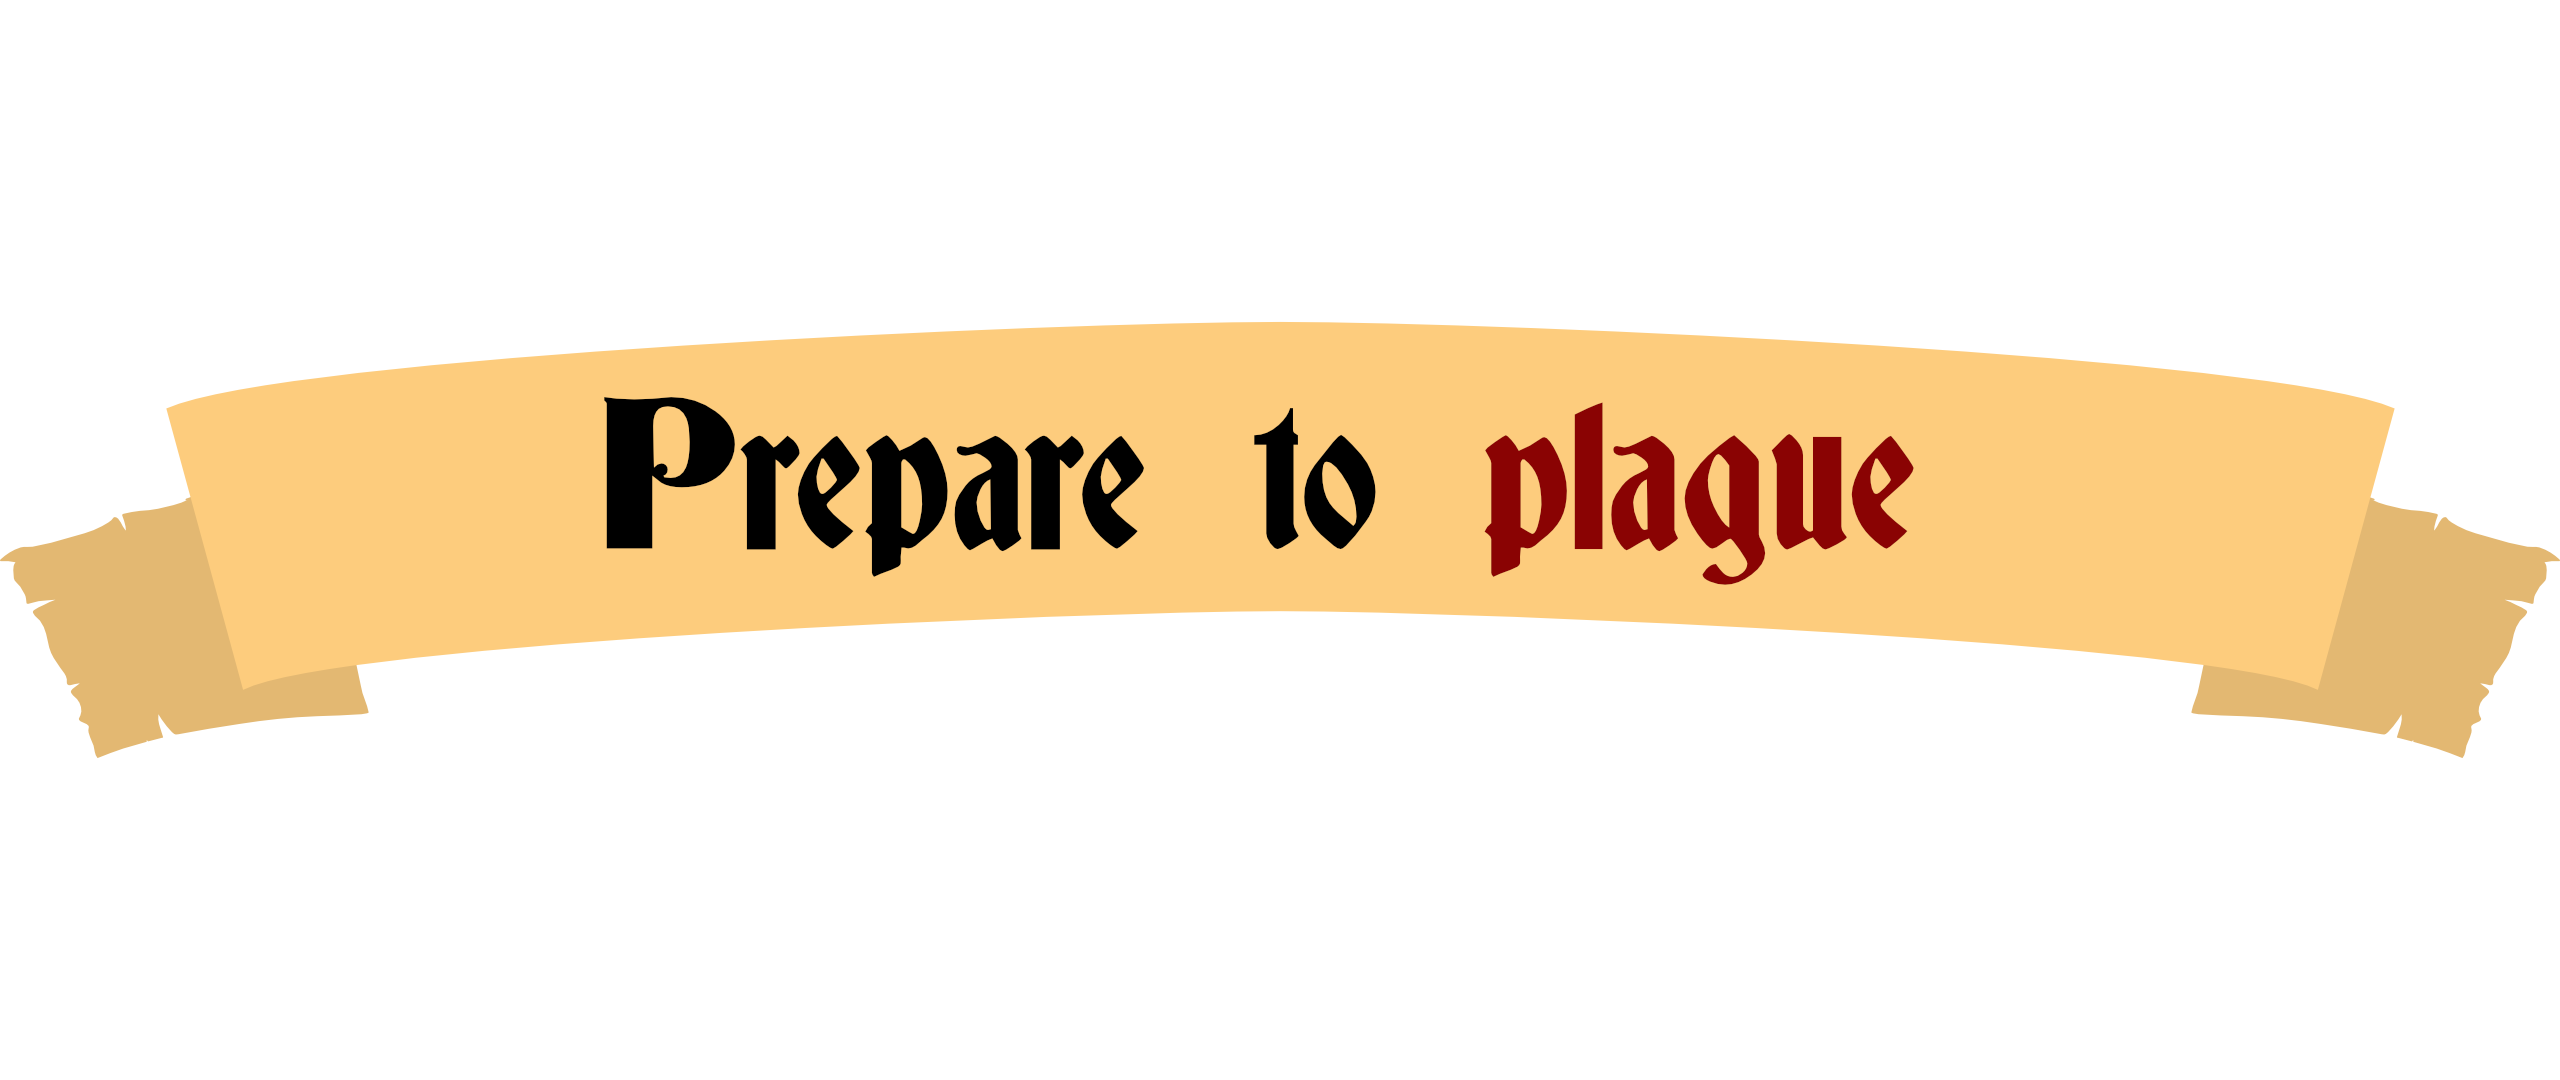 Prepare to plague